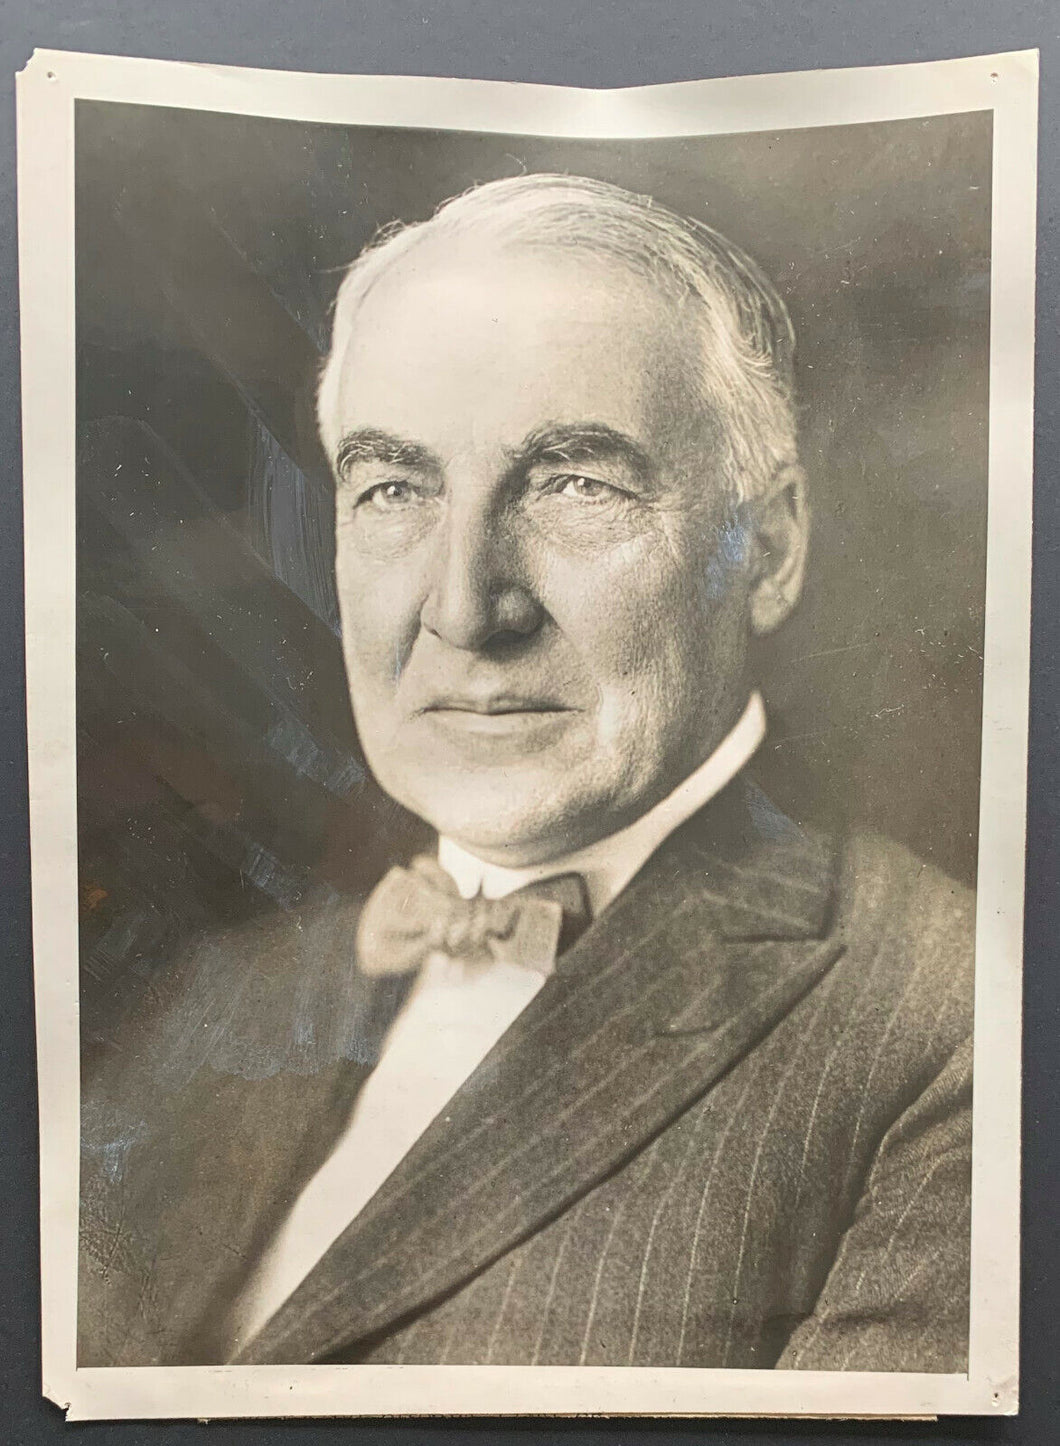 Vintage 1923 President Harding Photo Type 1 Portrait News Captions Sudden Death